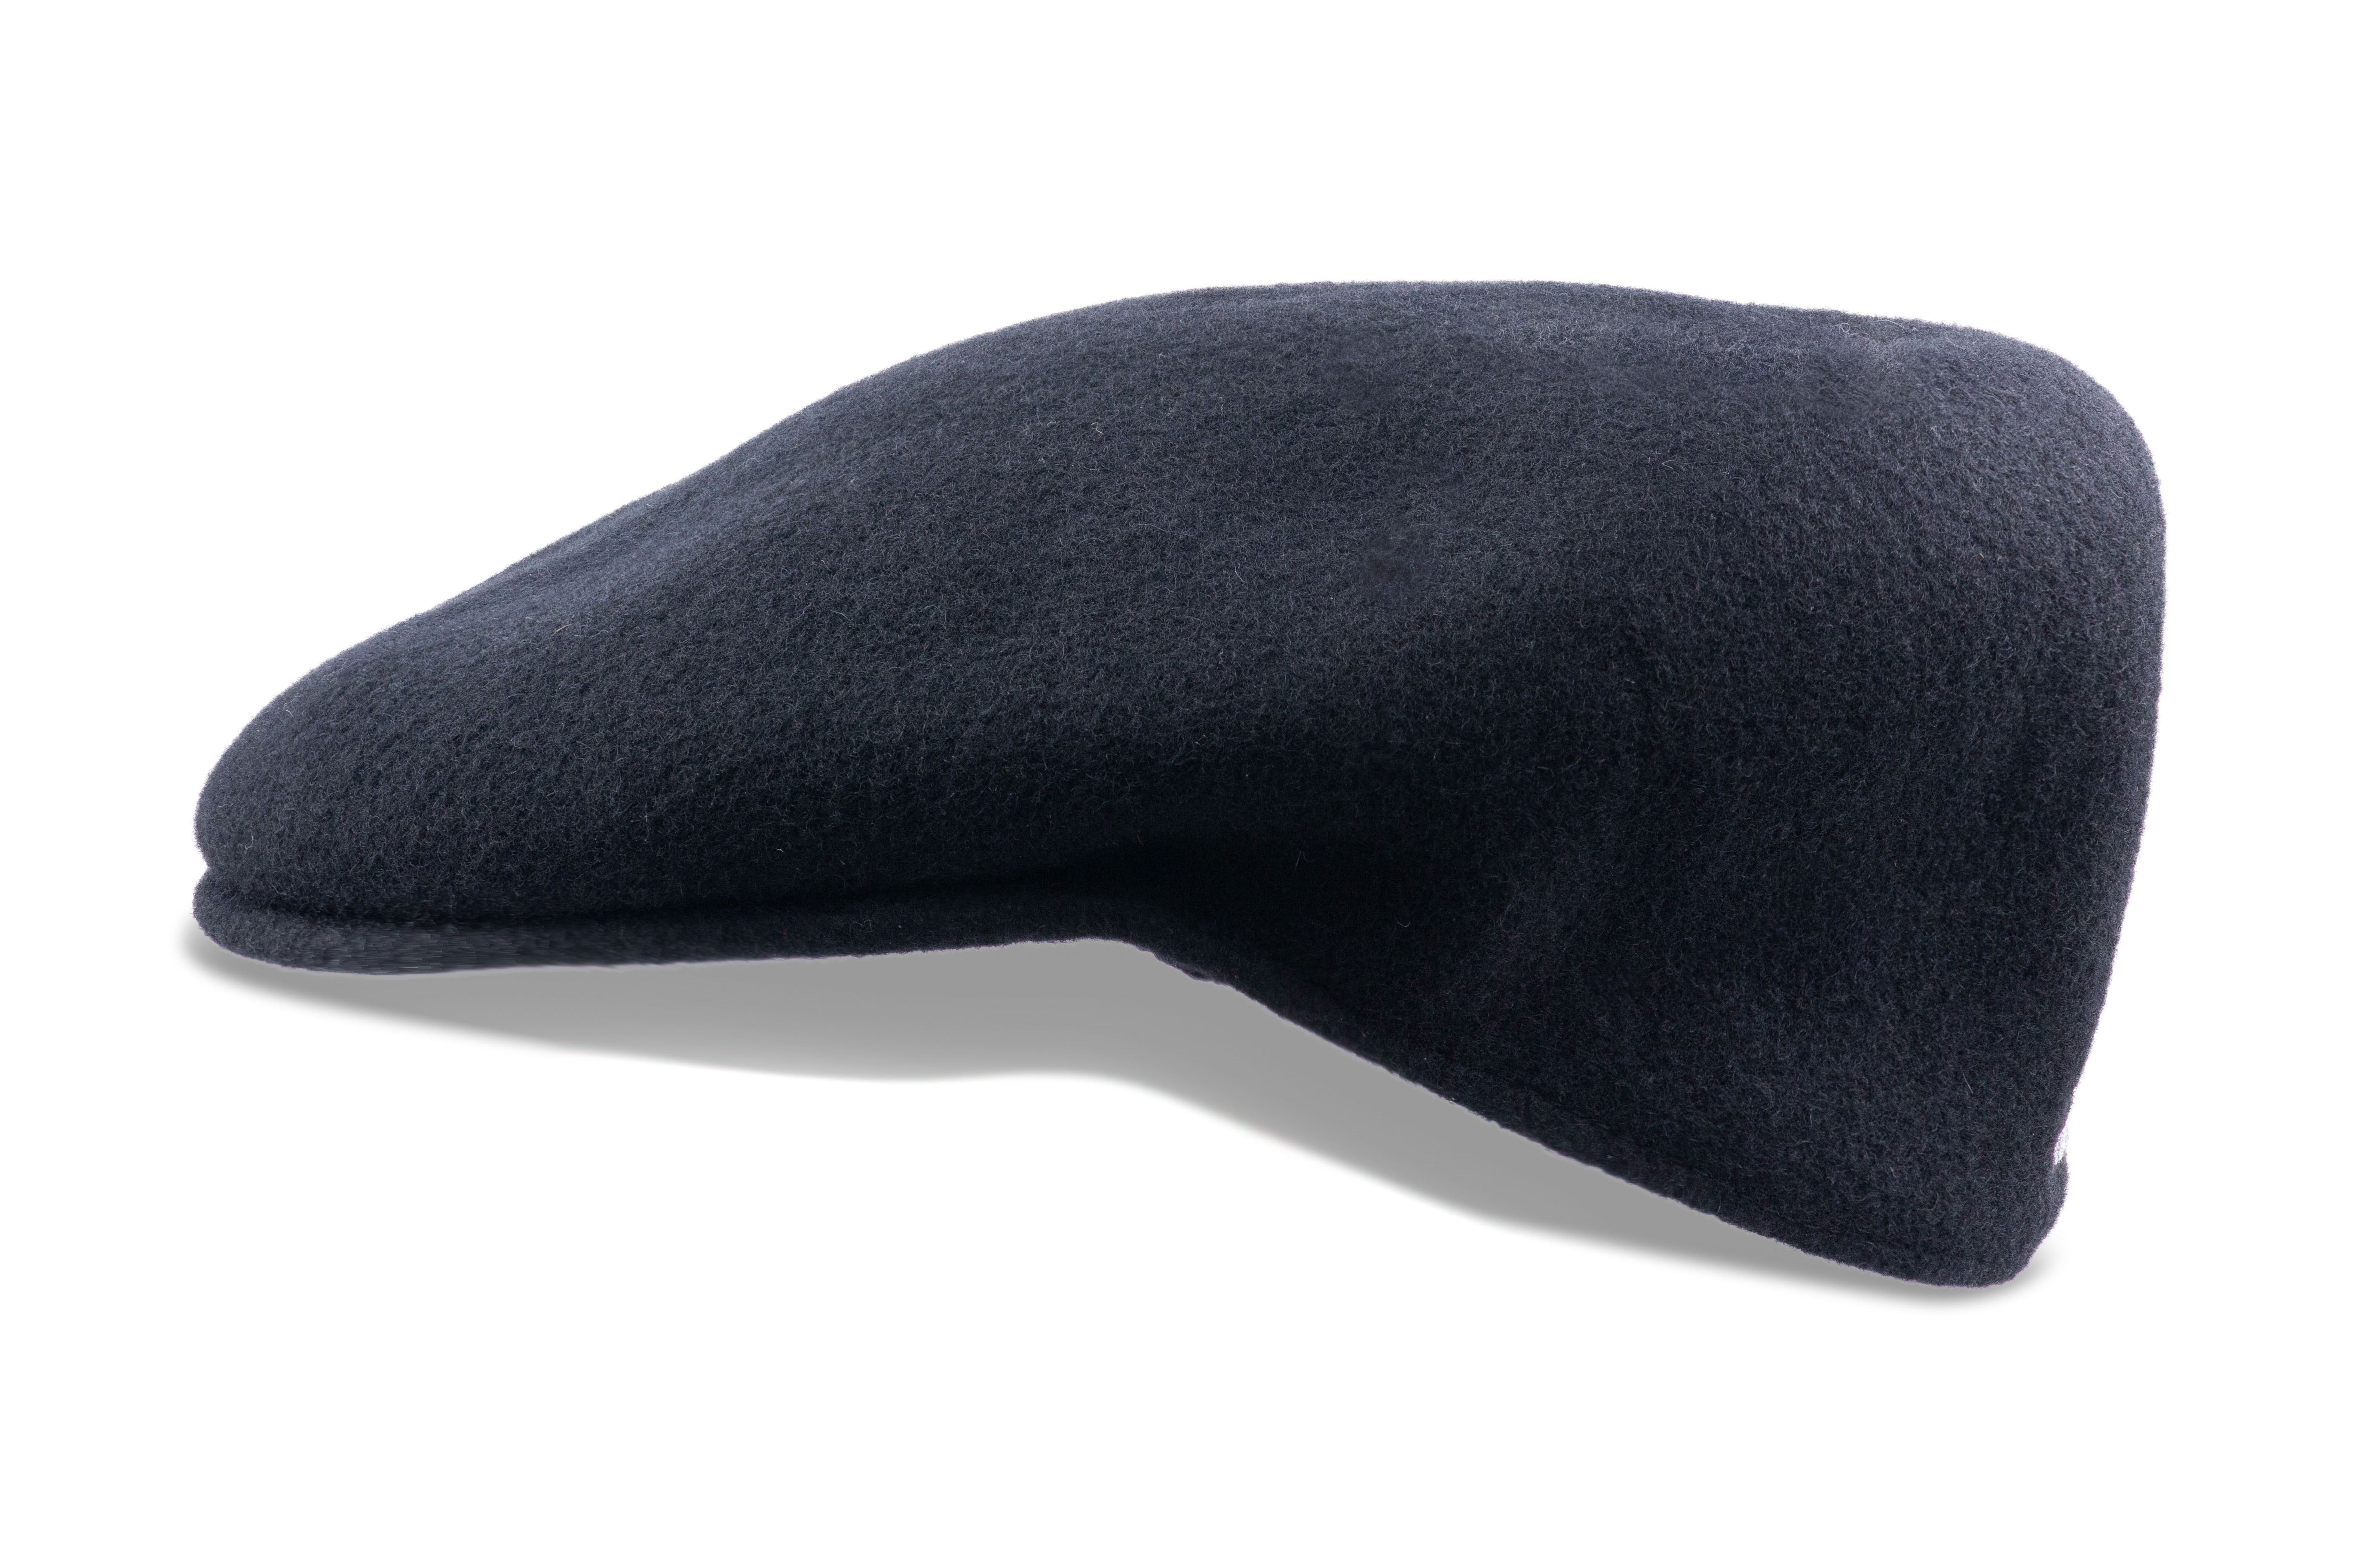 Kangol 504 Wool Felt Hat for Men and Women - Black - XXL